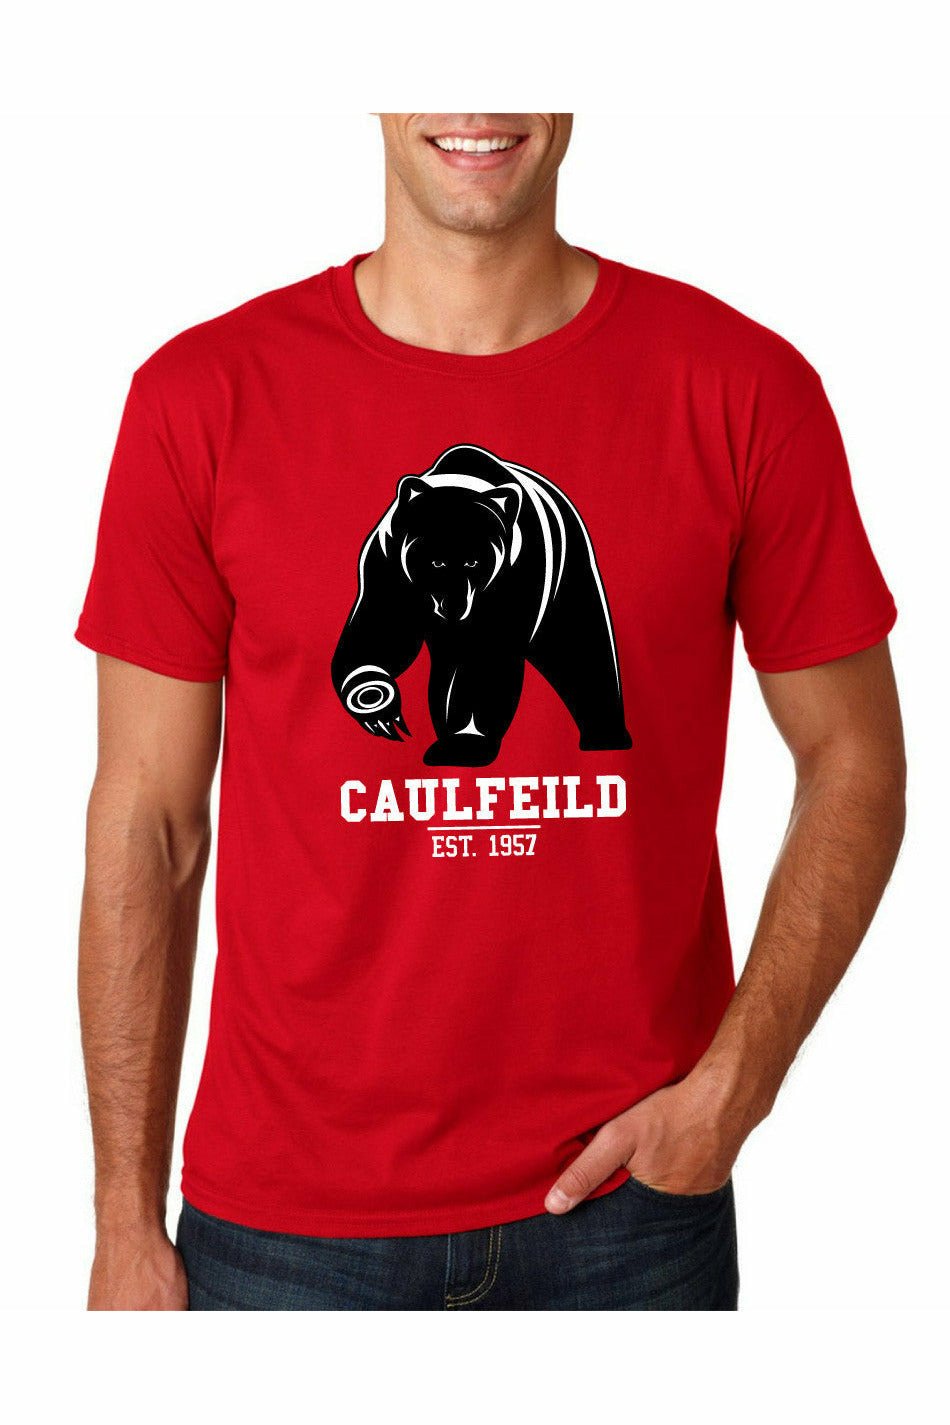 Caulfeild Short Sleeve T-shirt (Adult) - Oddball Workshop